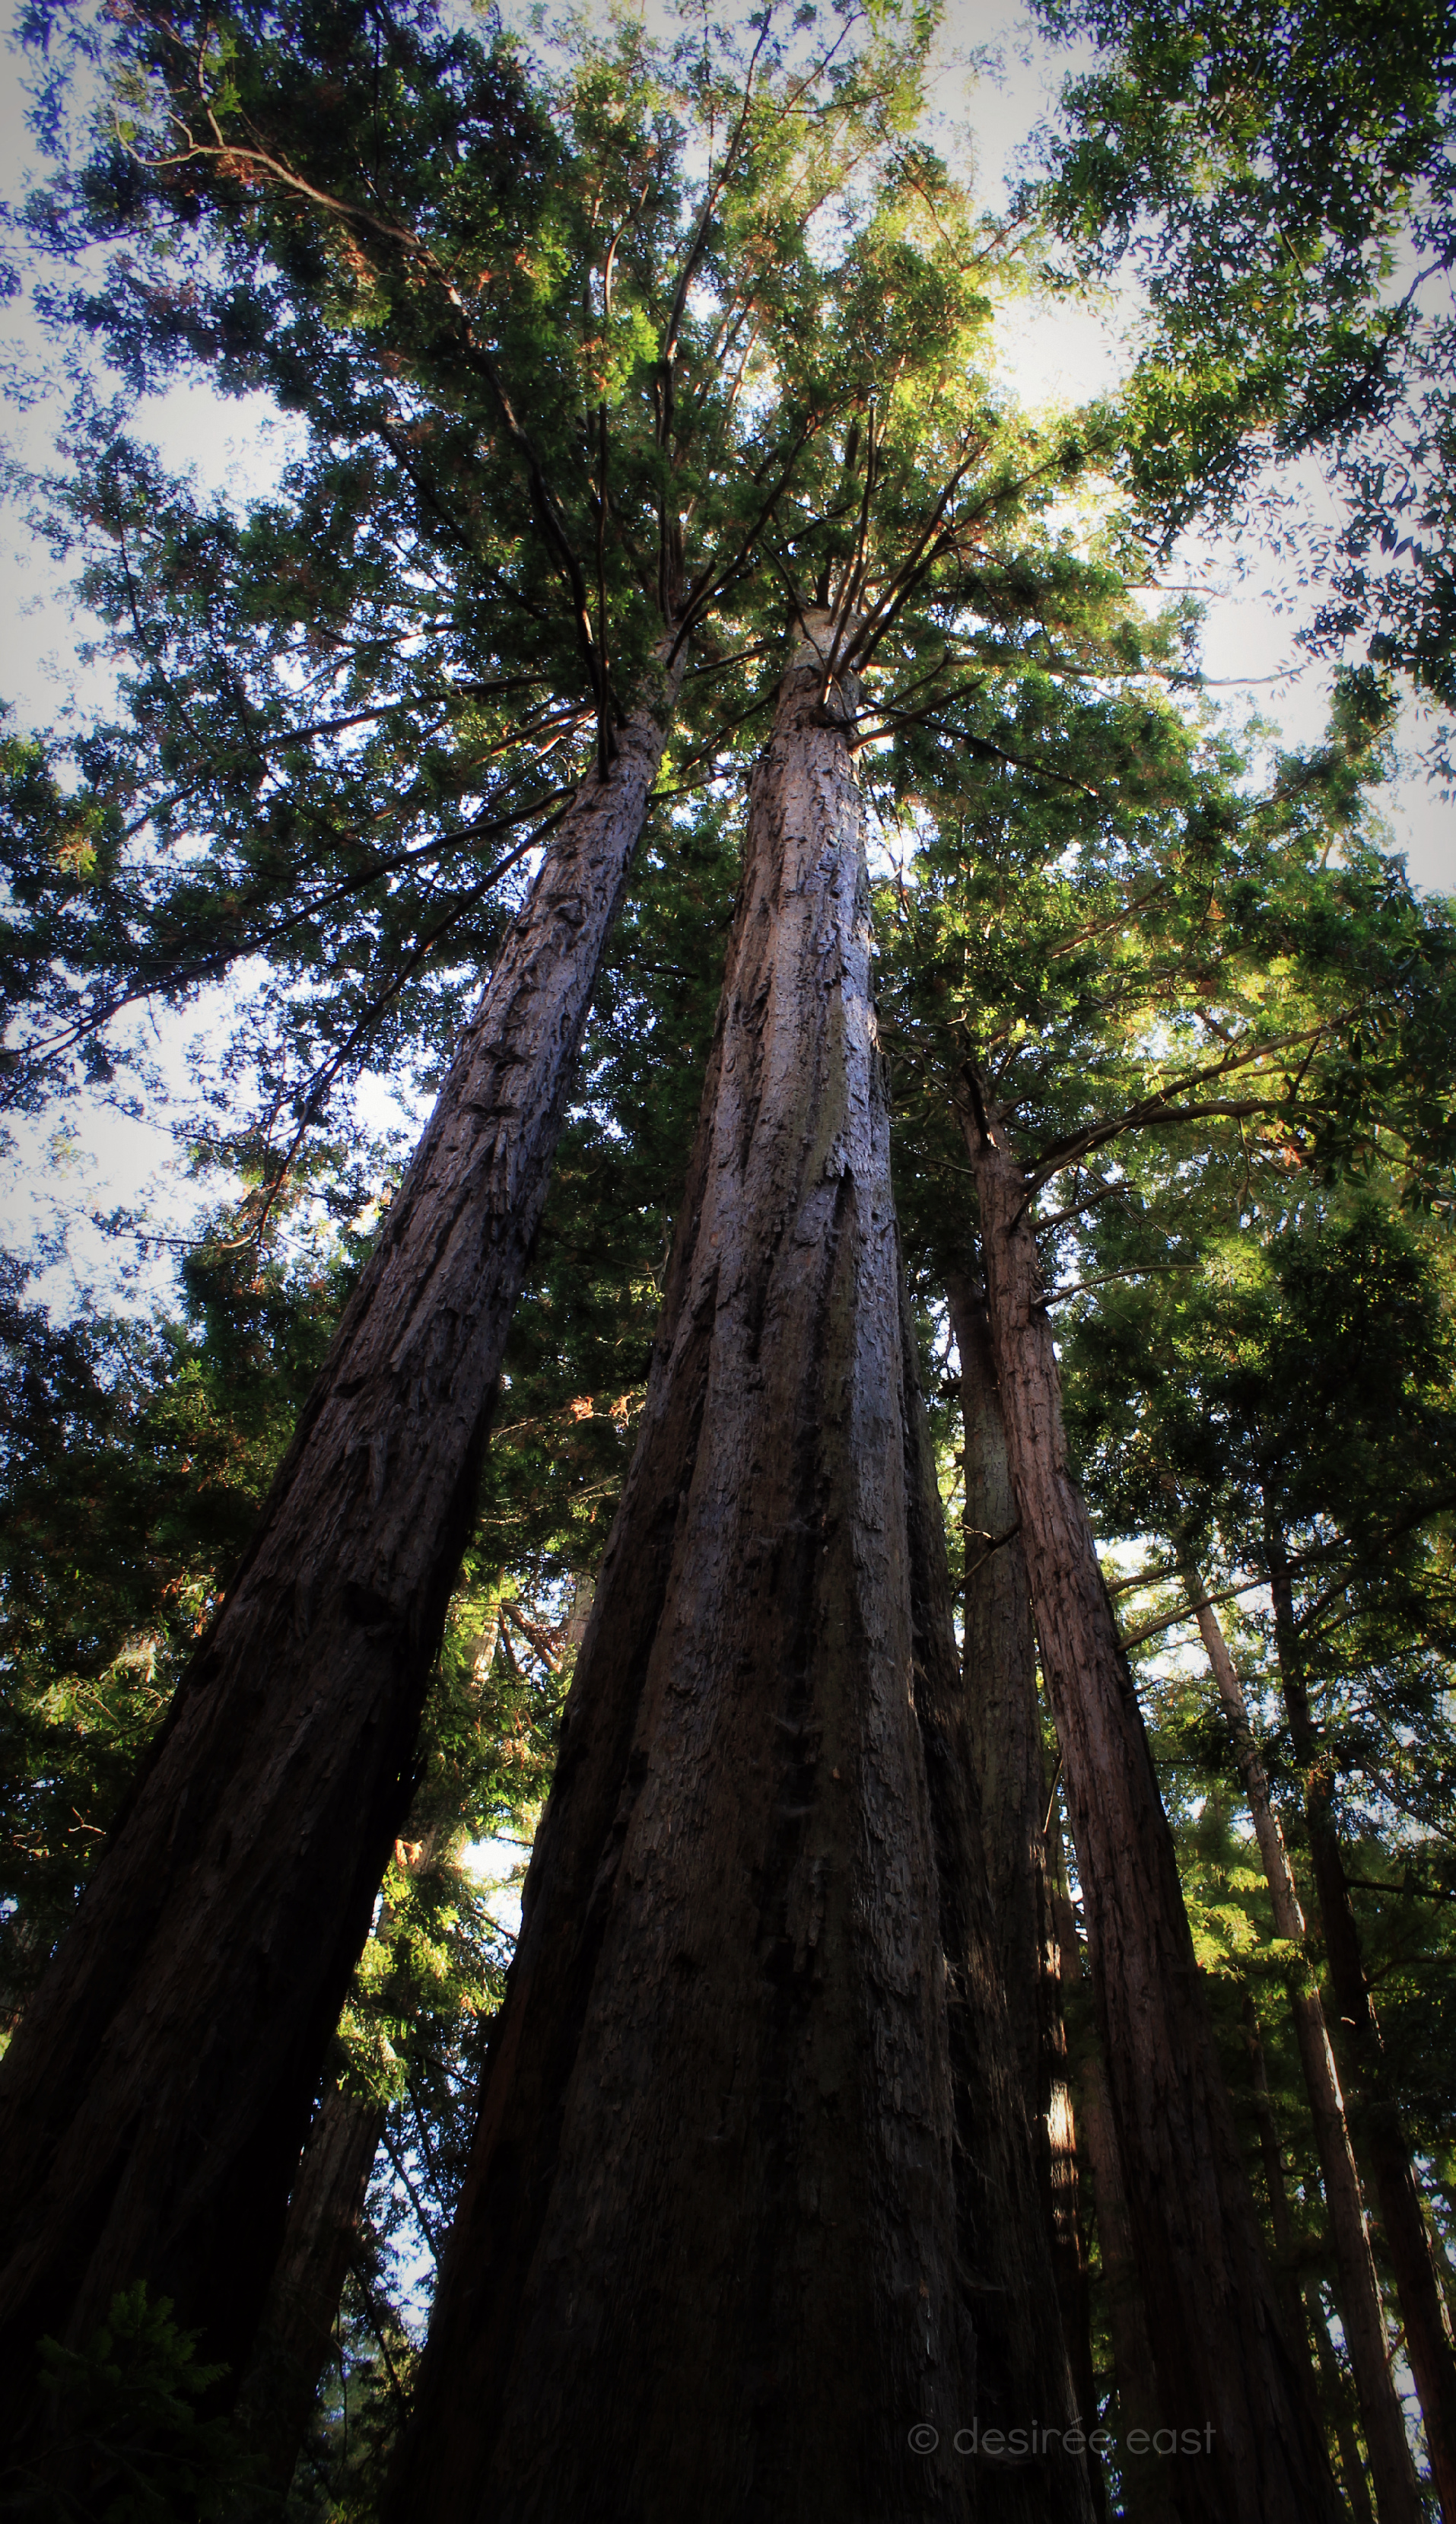 statuesque beauties. sequoia sempervirens - coast redwoods. big sur, california. photo by desiree east